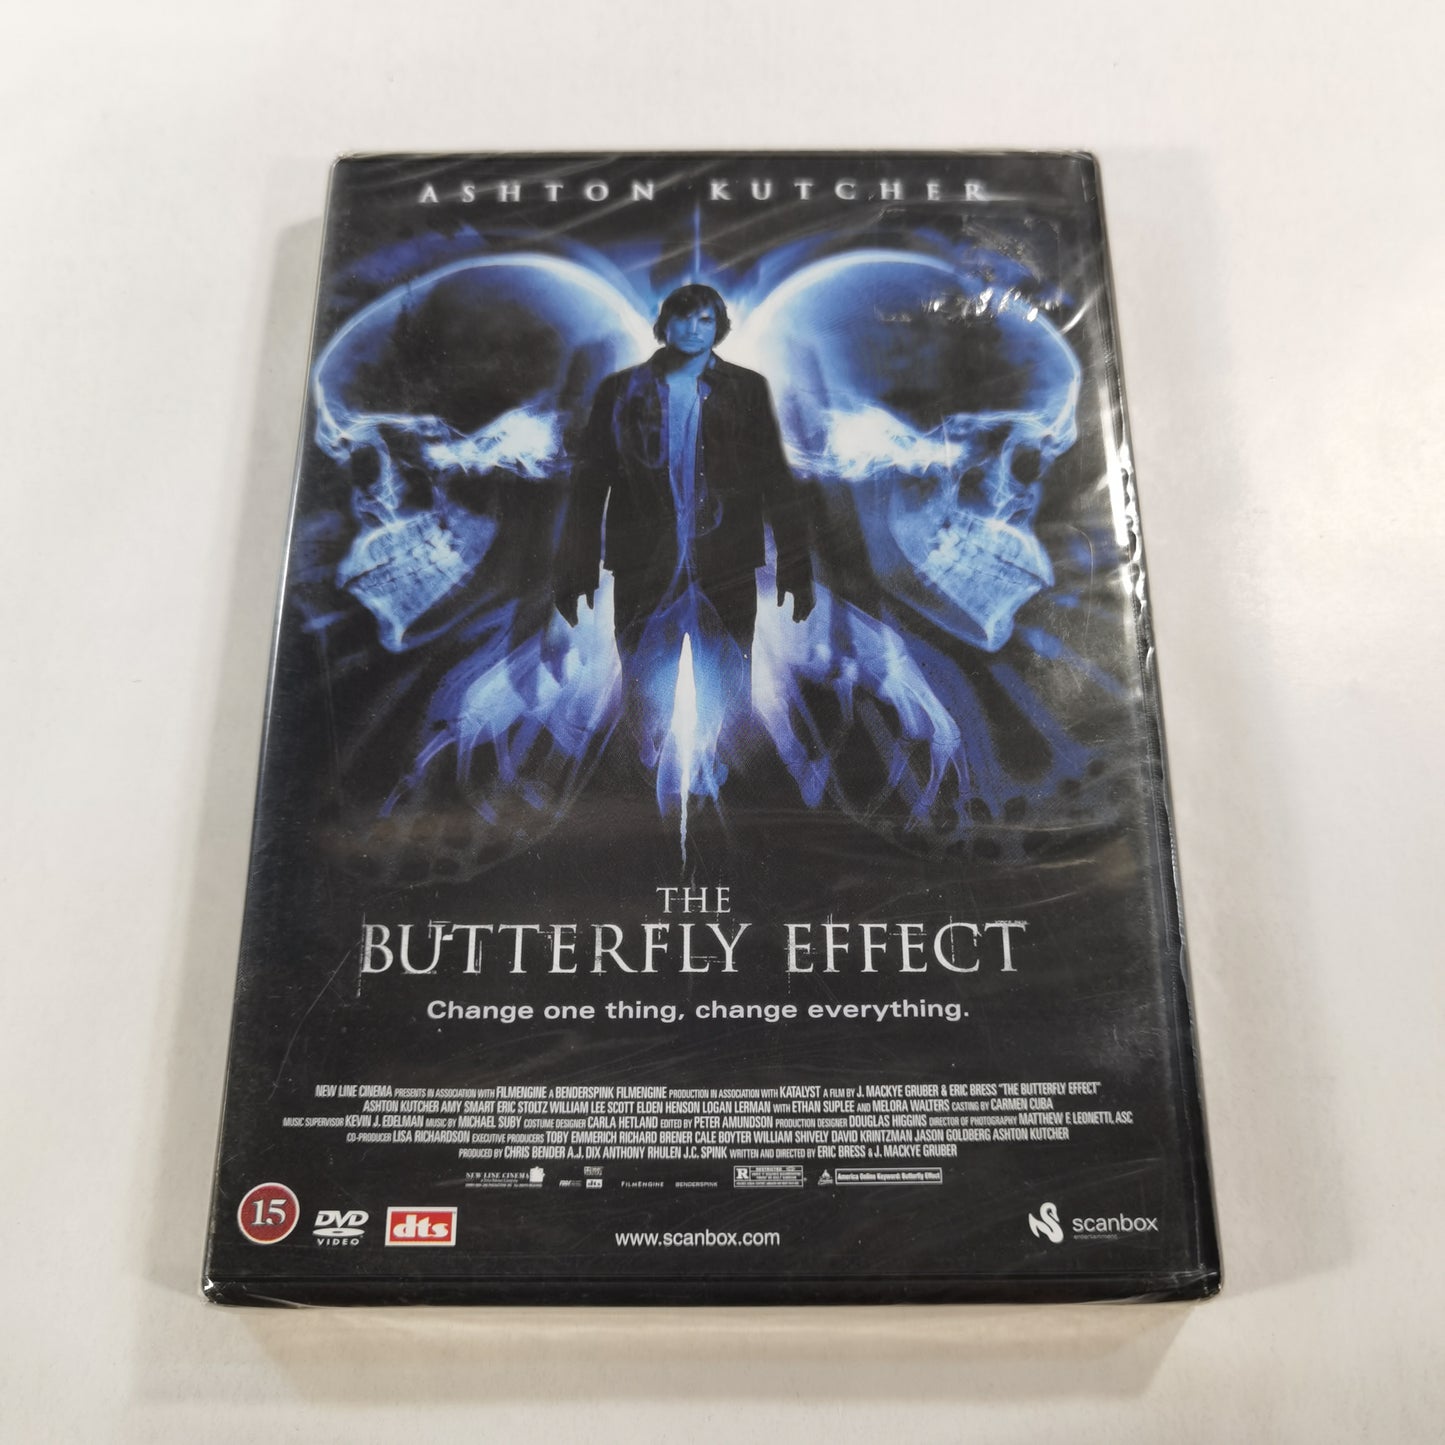 The Butterfly Effect (2004) - DVD SE NO DK FI NEW!